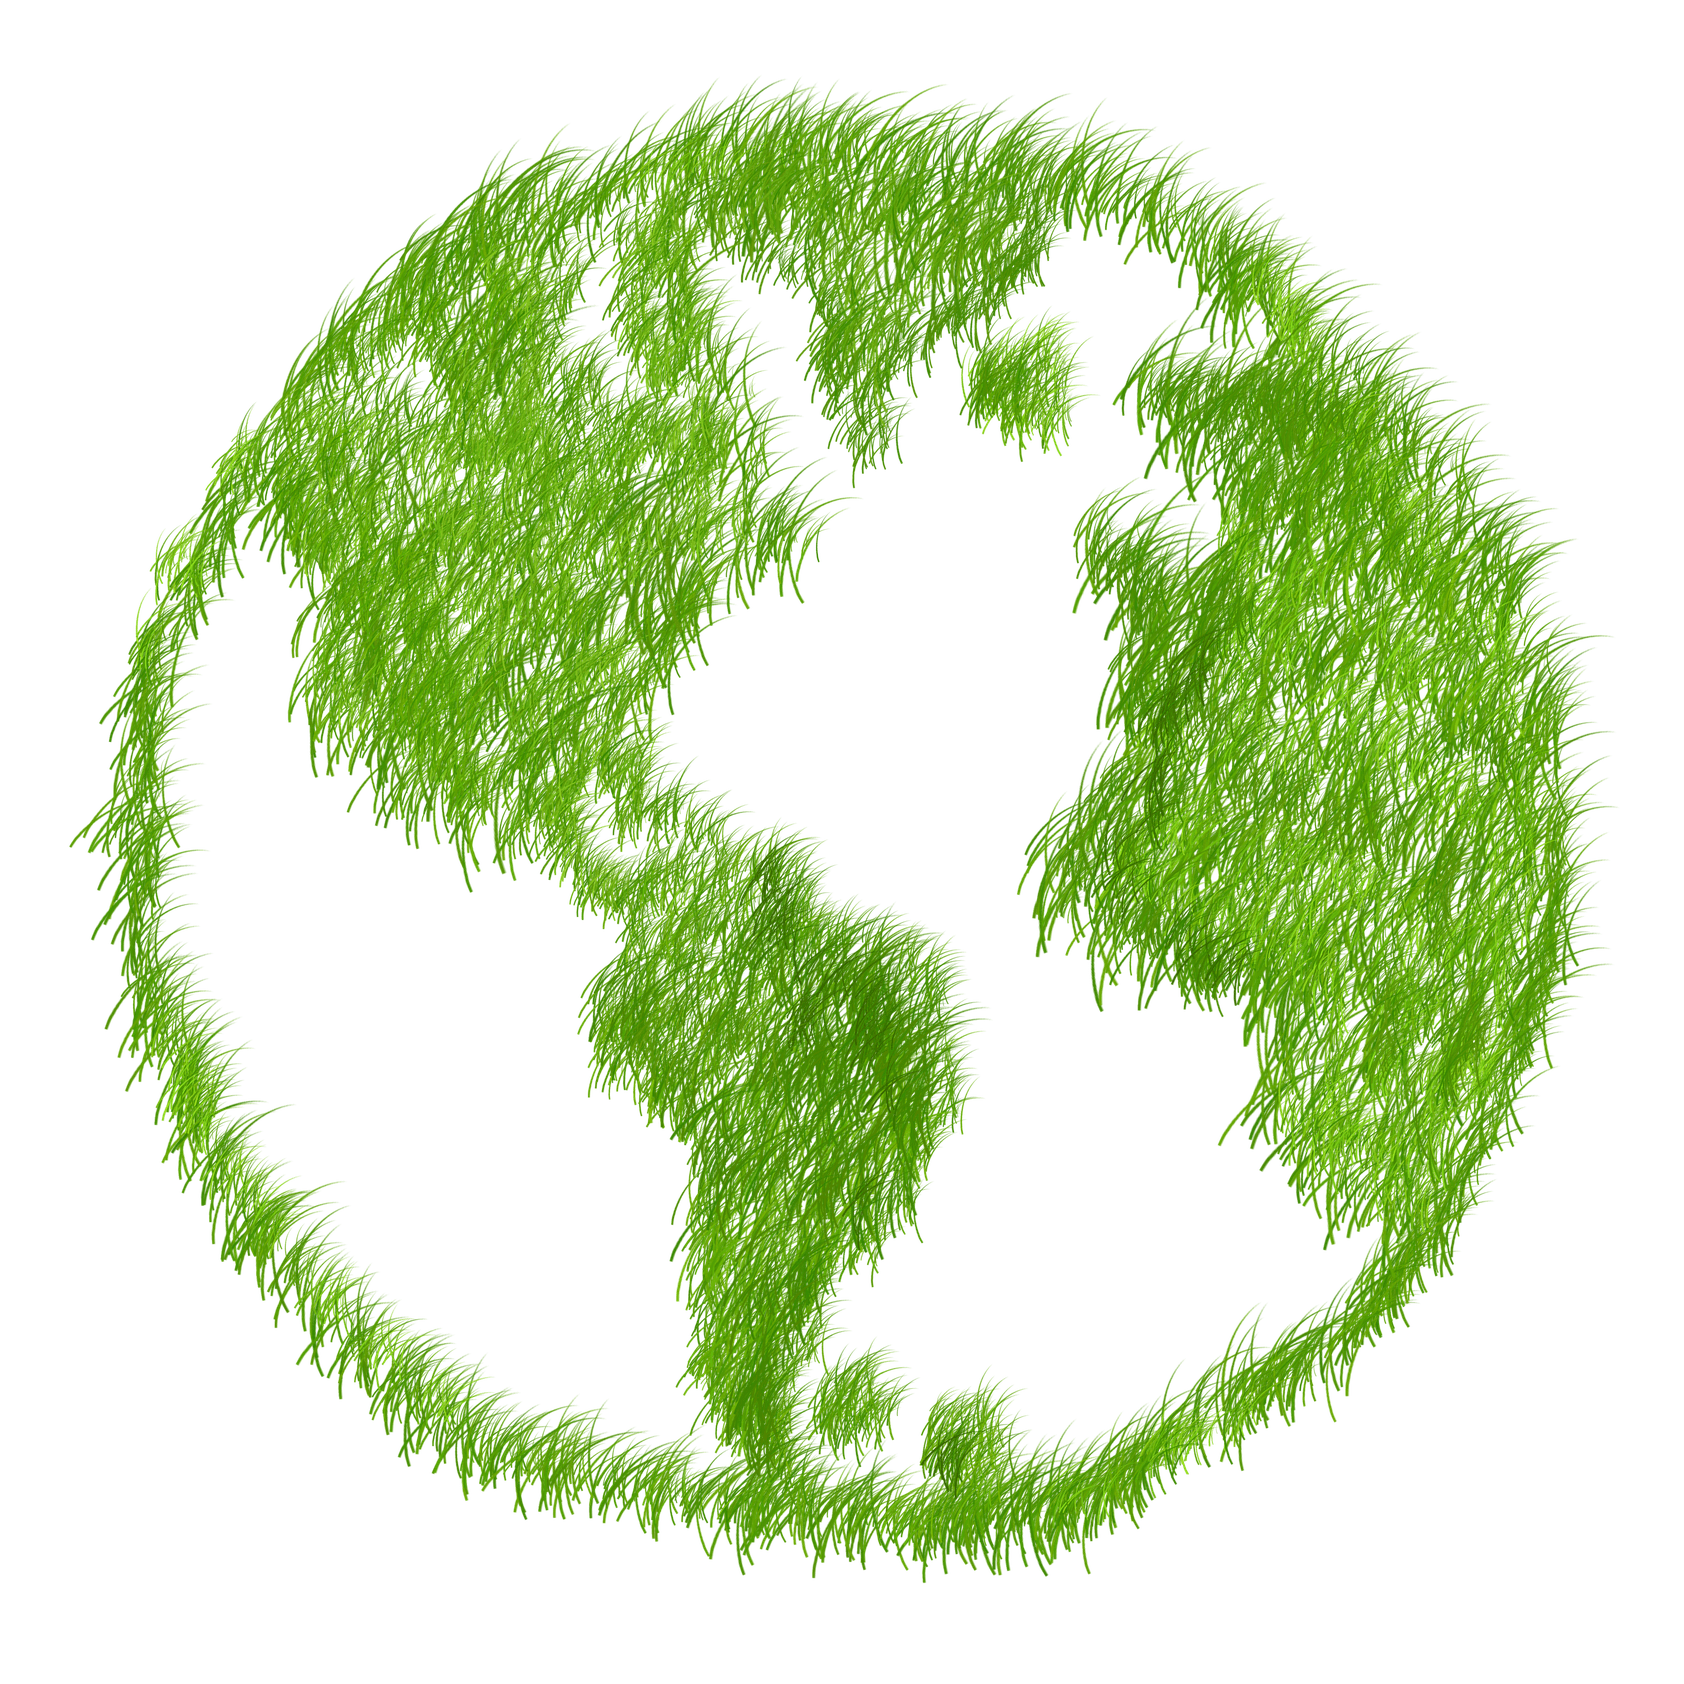 Green globe depicting an eco-friendly world